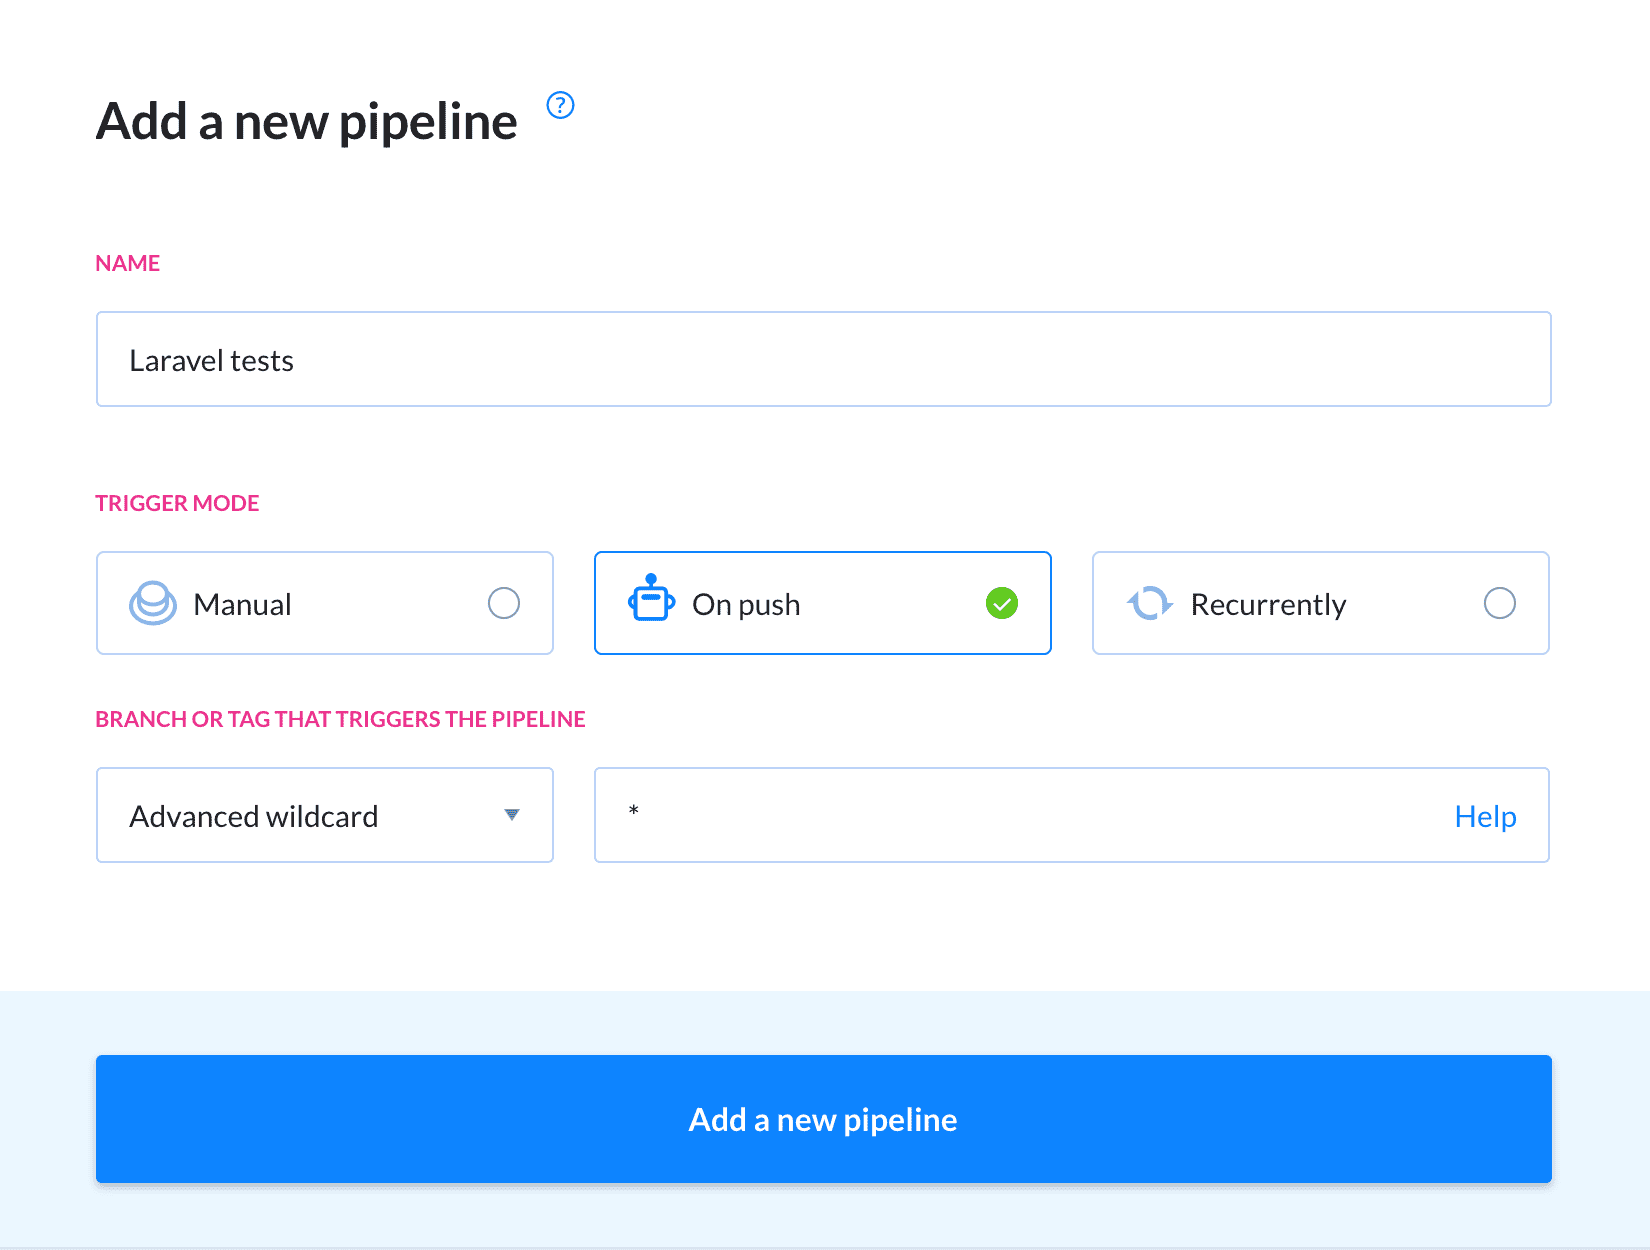 Adding a new pipeline